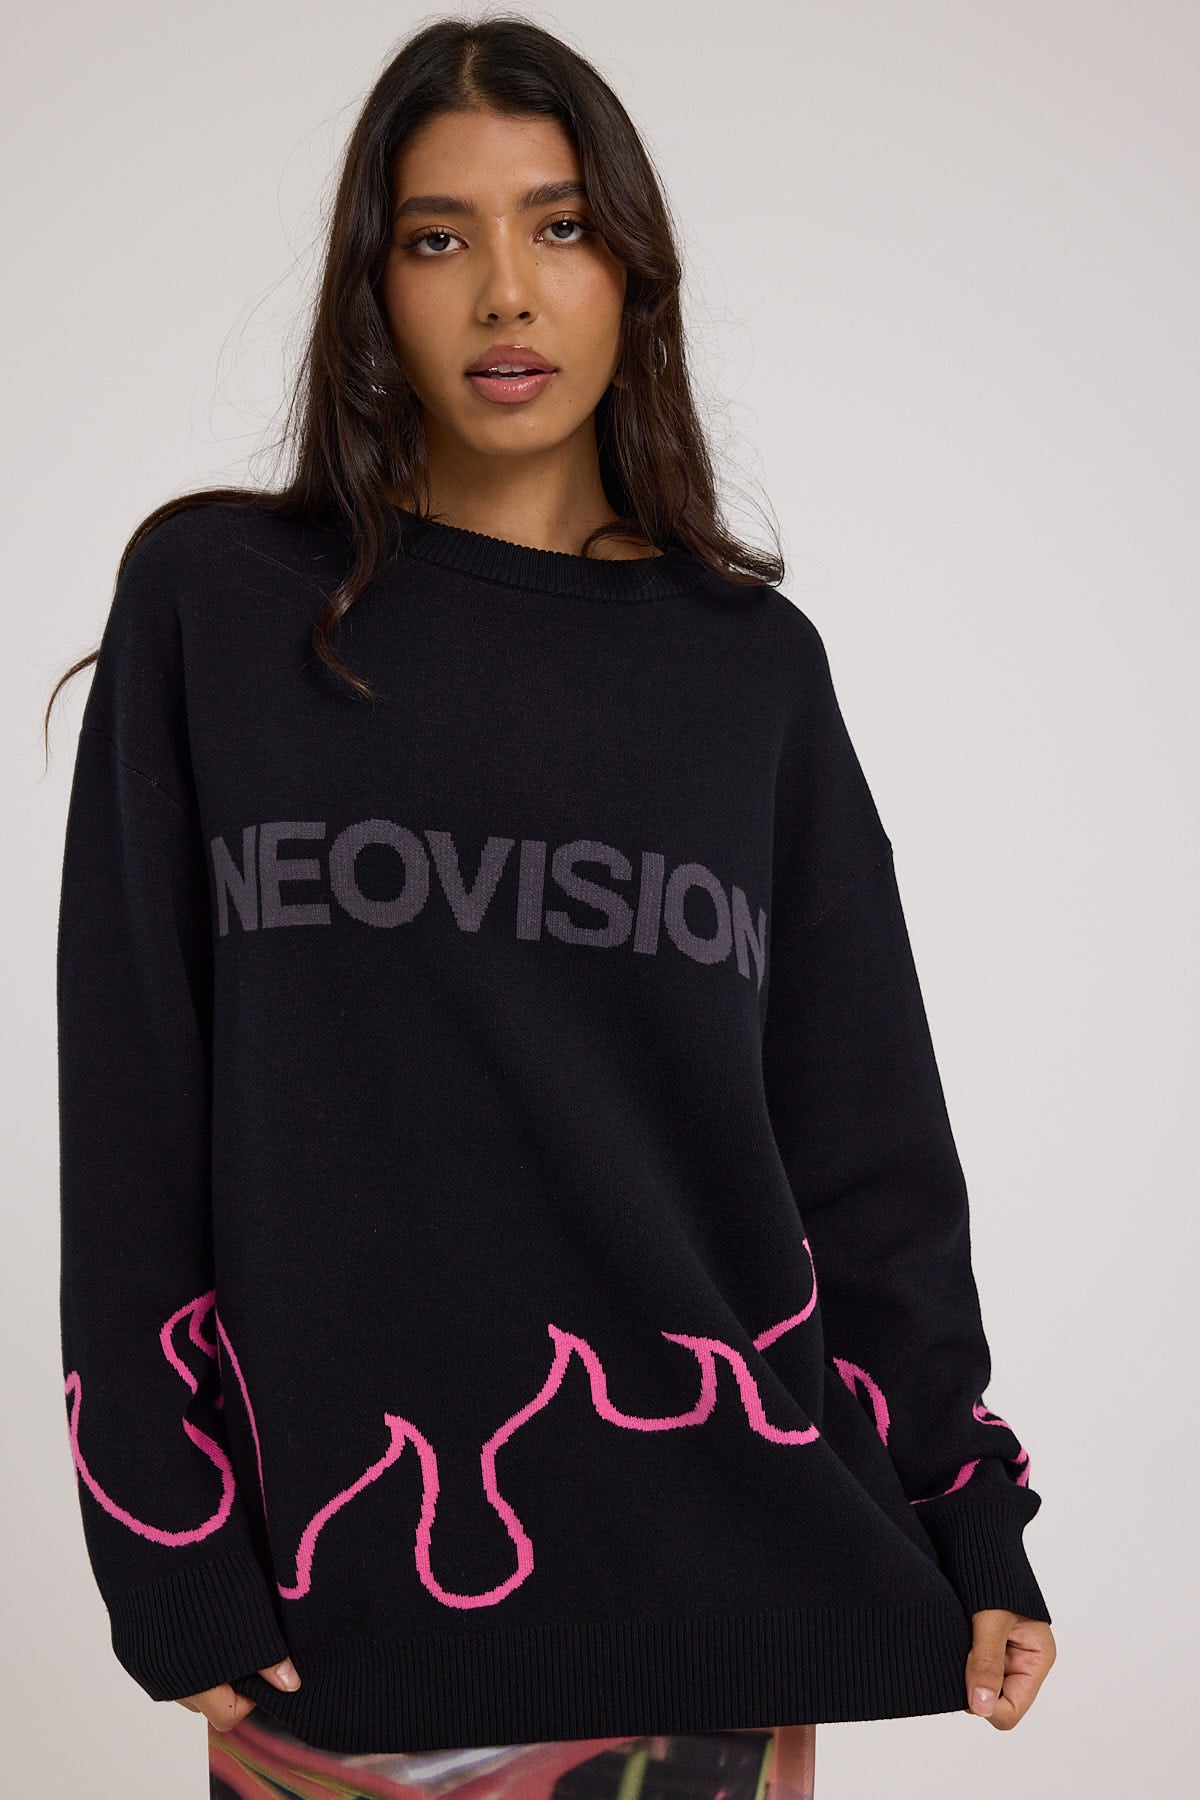 Neovision Inferno Knit Sweater Black